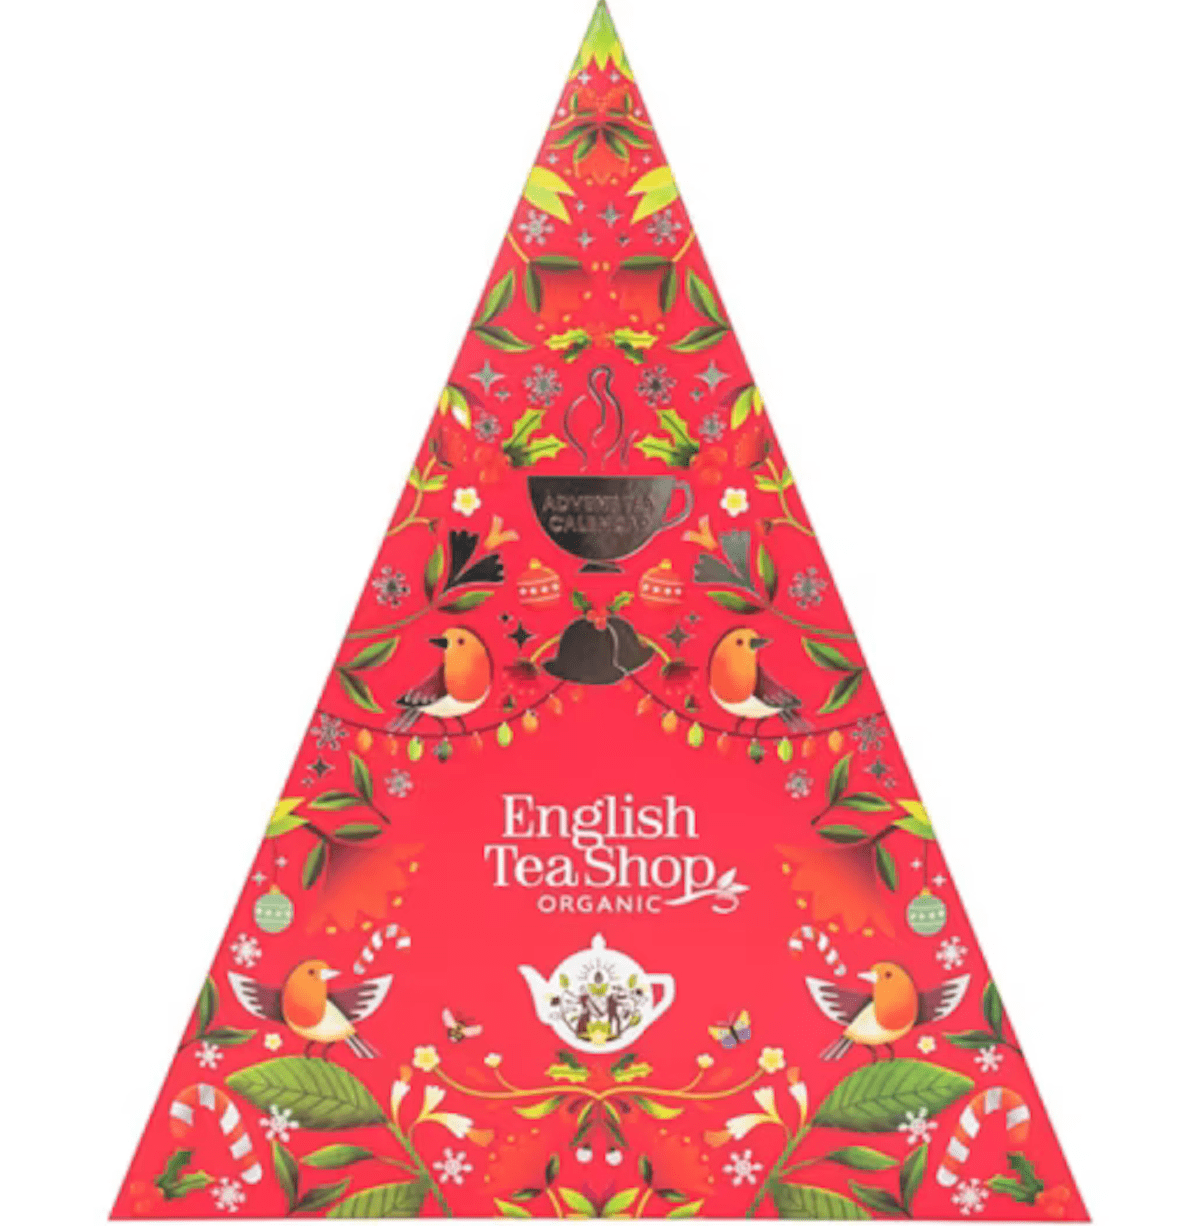 Red triangle advent calendar with festive print. Christmas advent calendars